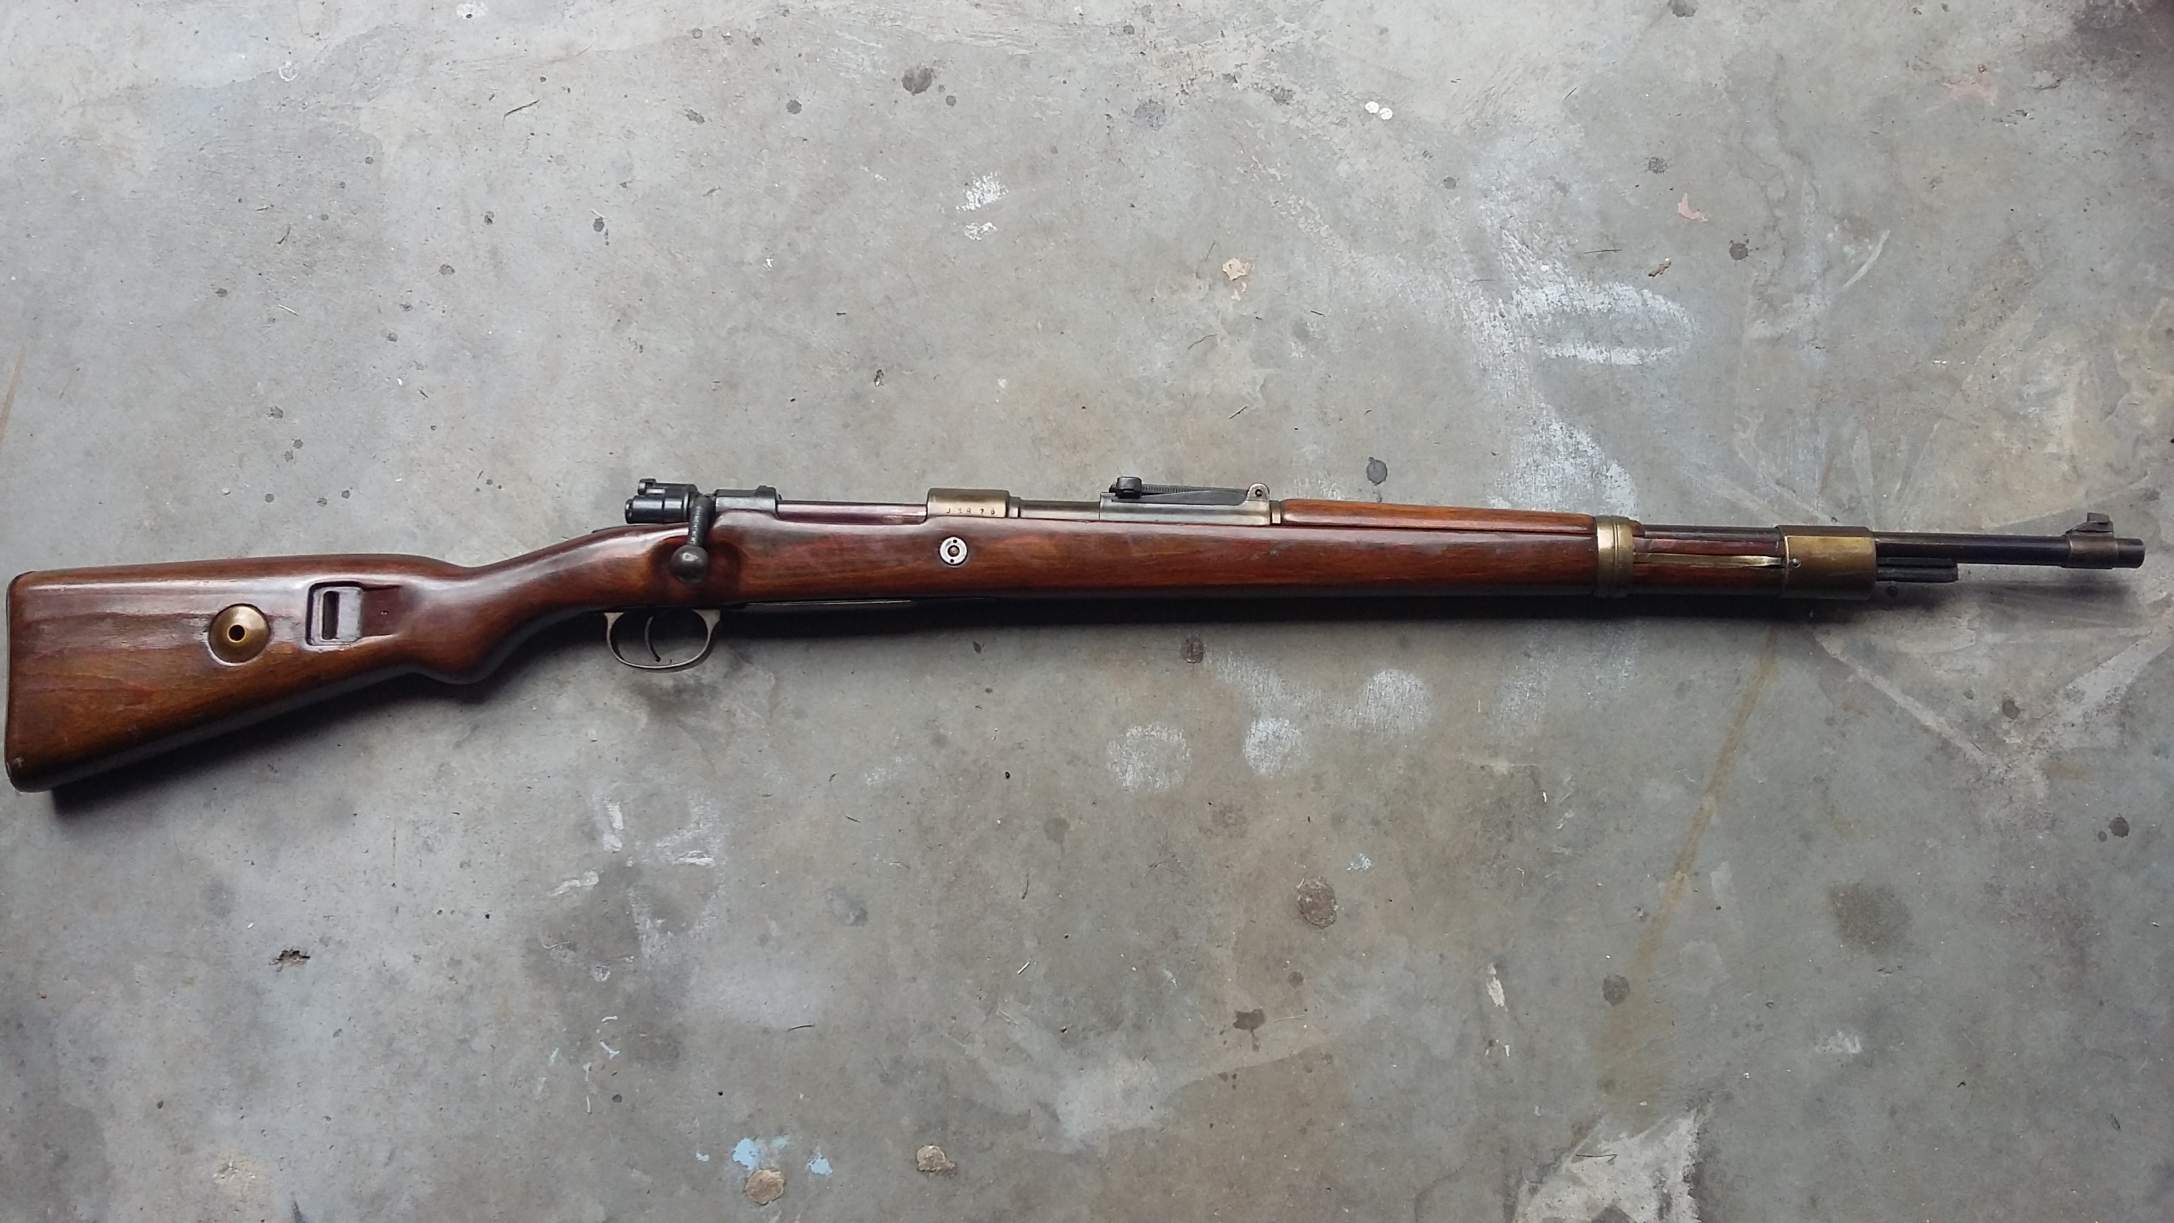 Mauser preduzece 44 model 98 8mm rifle, wwii german waffen marked sites. 